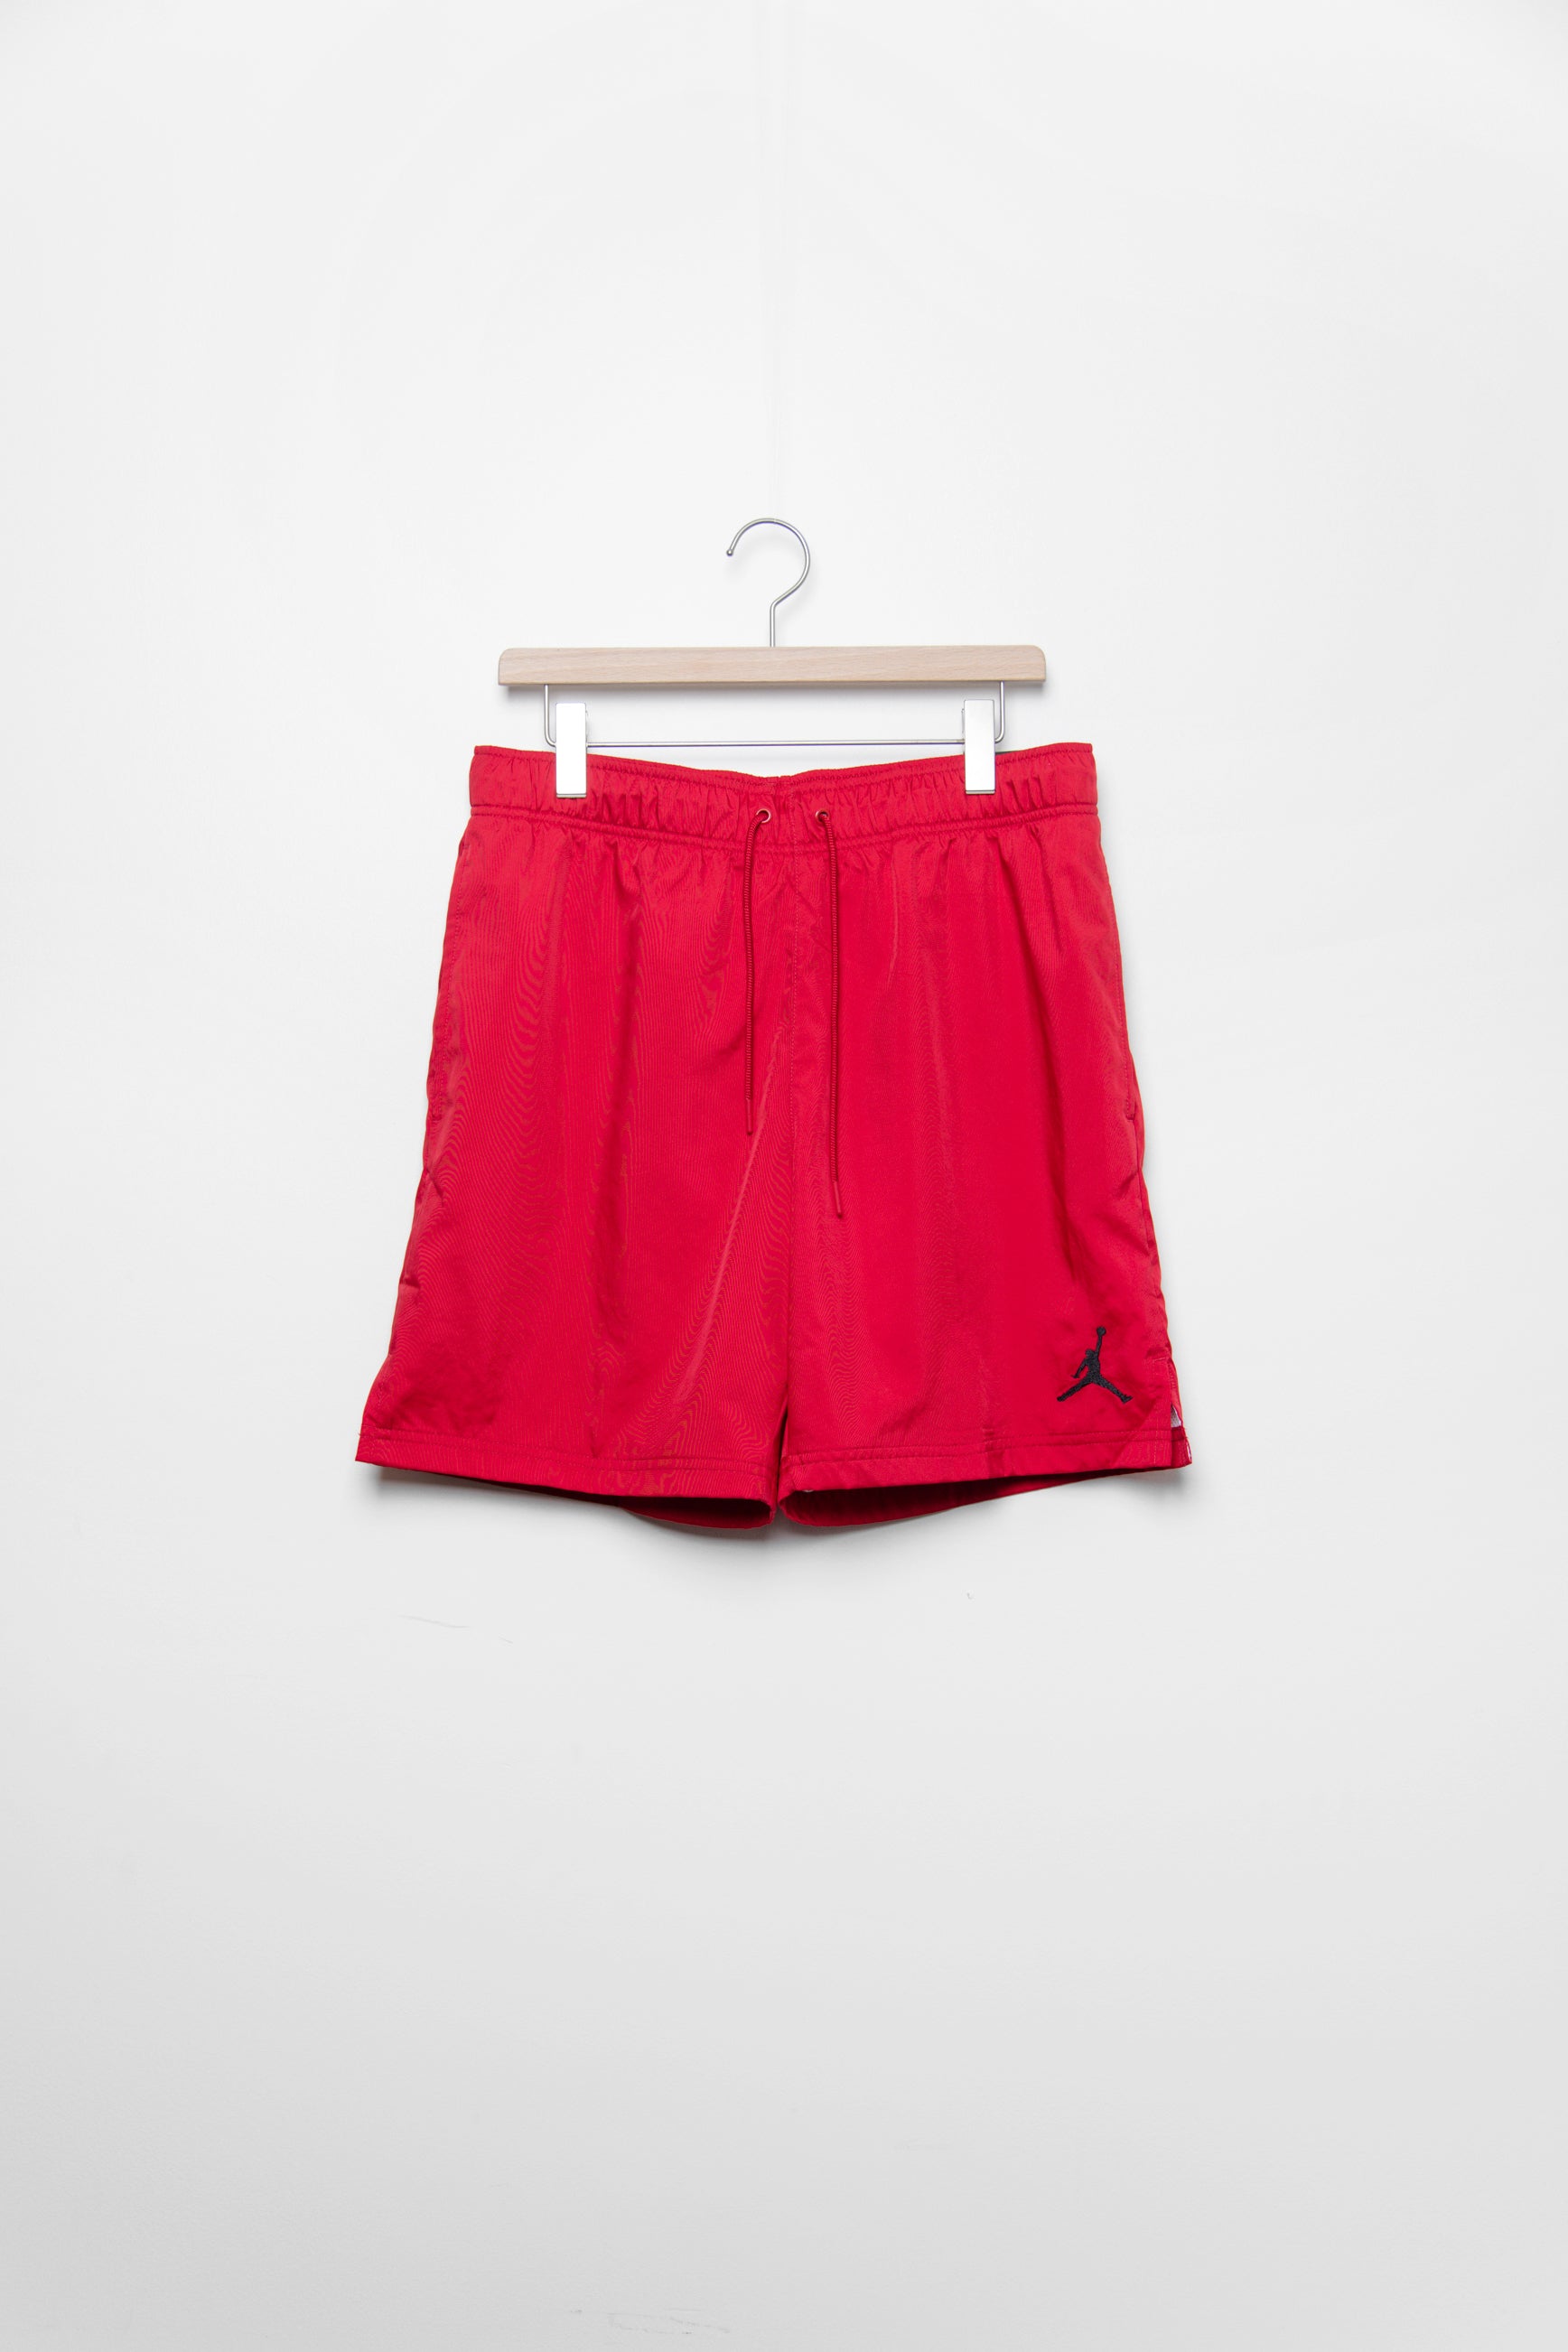 Jordan - Men - Mesh GFX Shorts - Gym Red/Black - Nohble